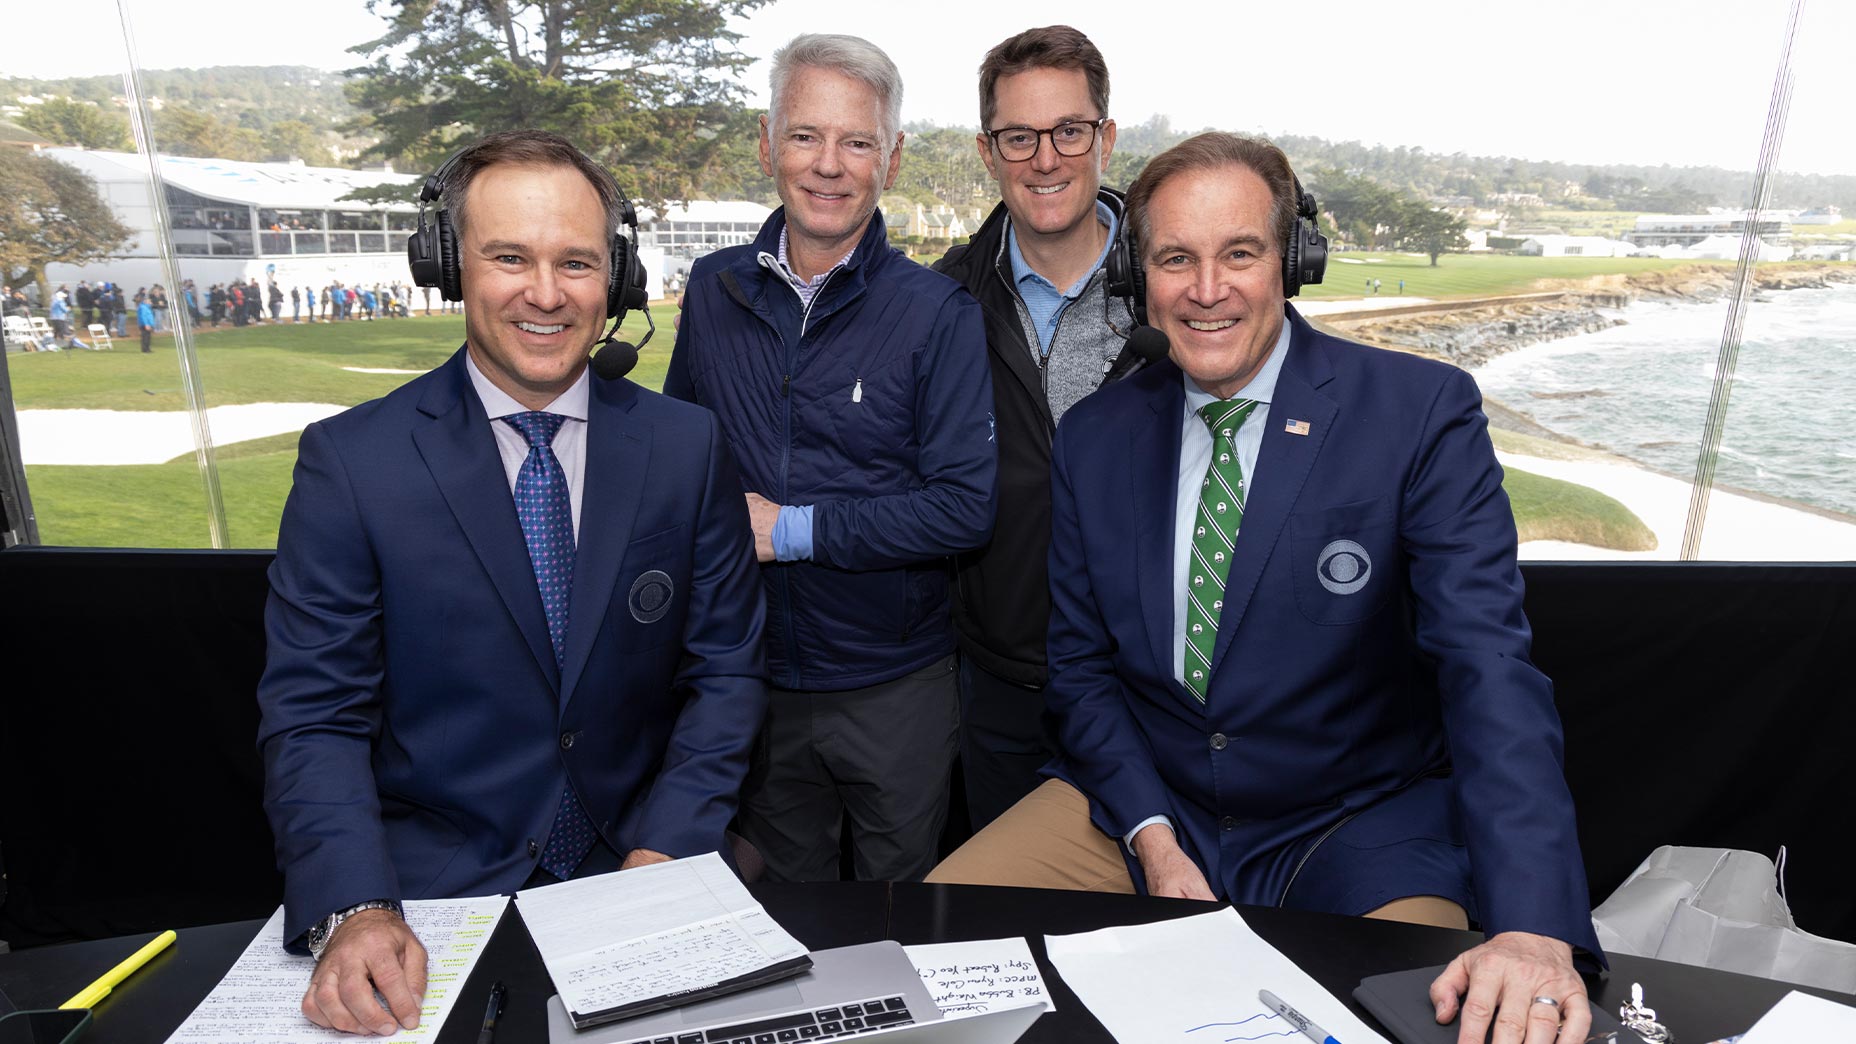 CBS Sports TV members jim nantz, trevor immelman, sean mcmanus, and david berson pose for a photo at golf tournament